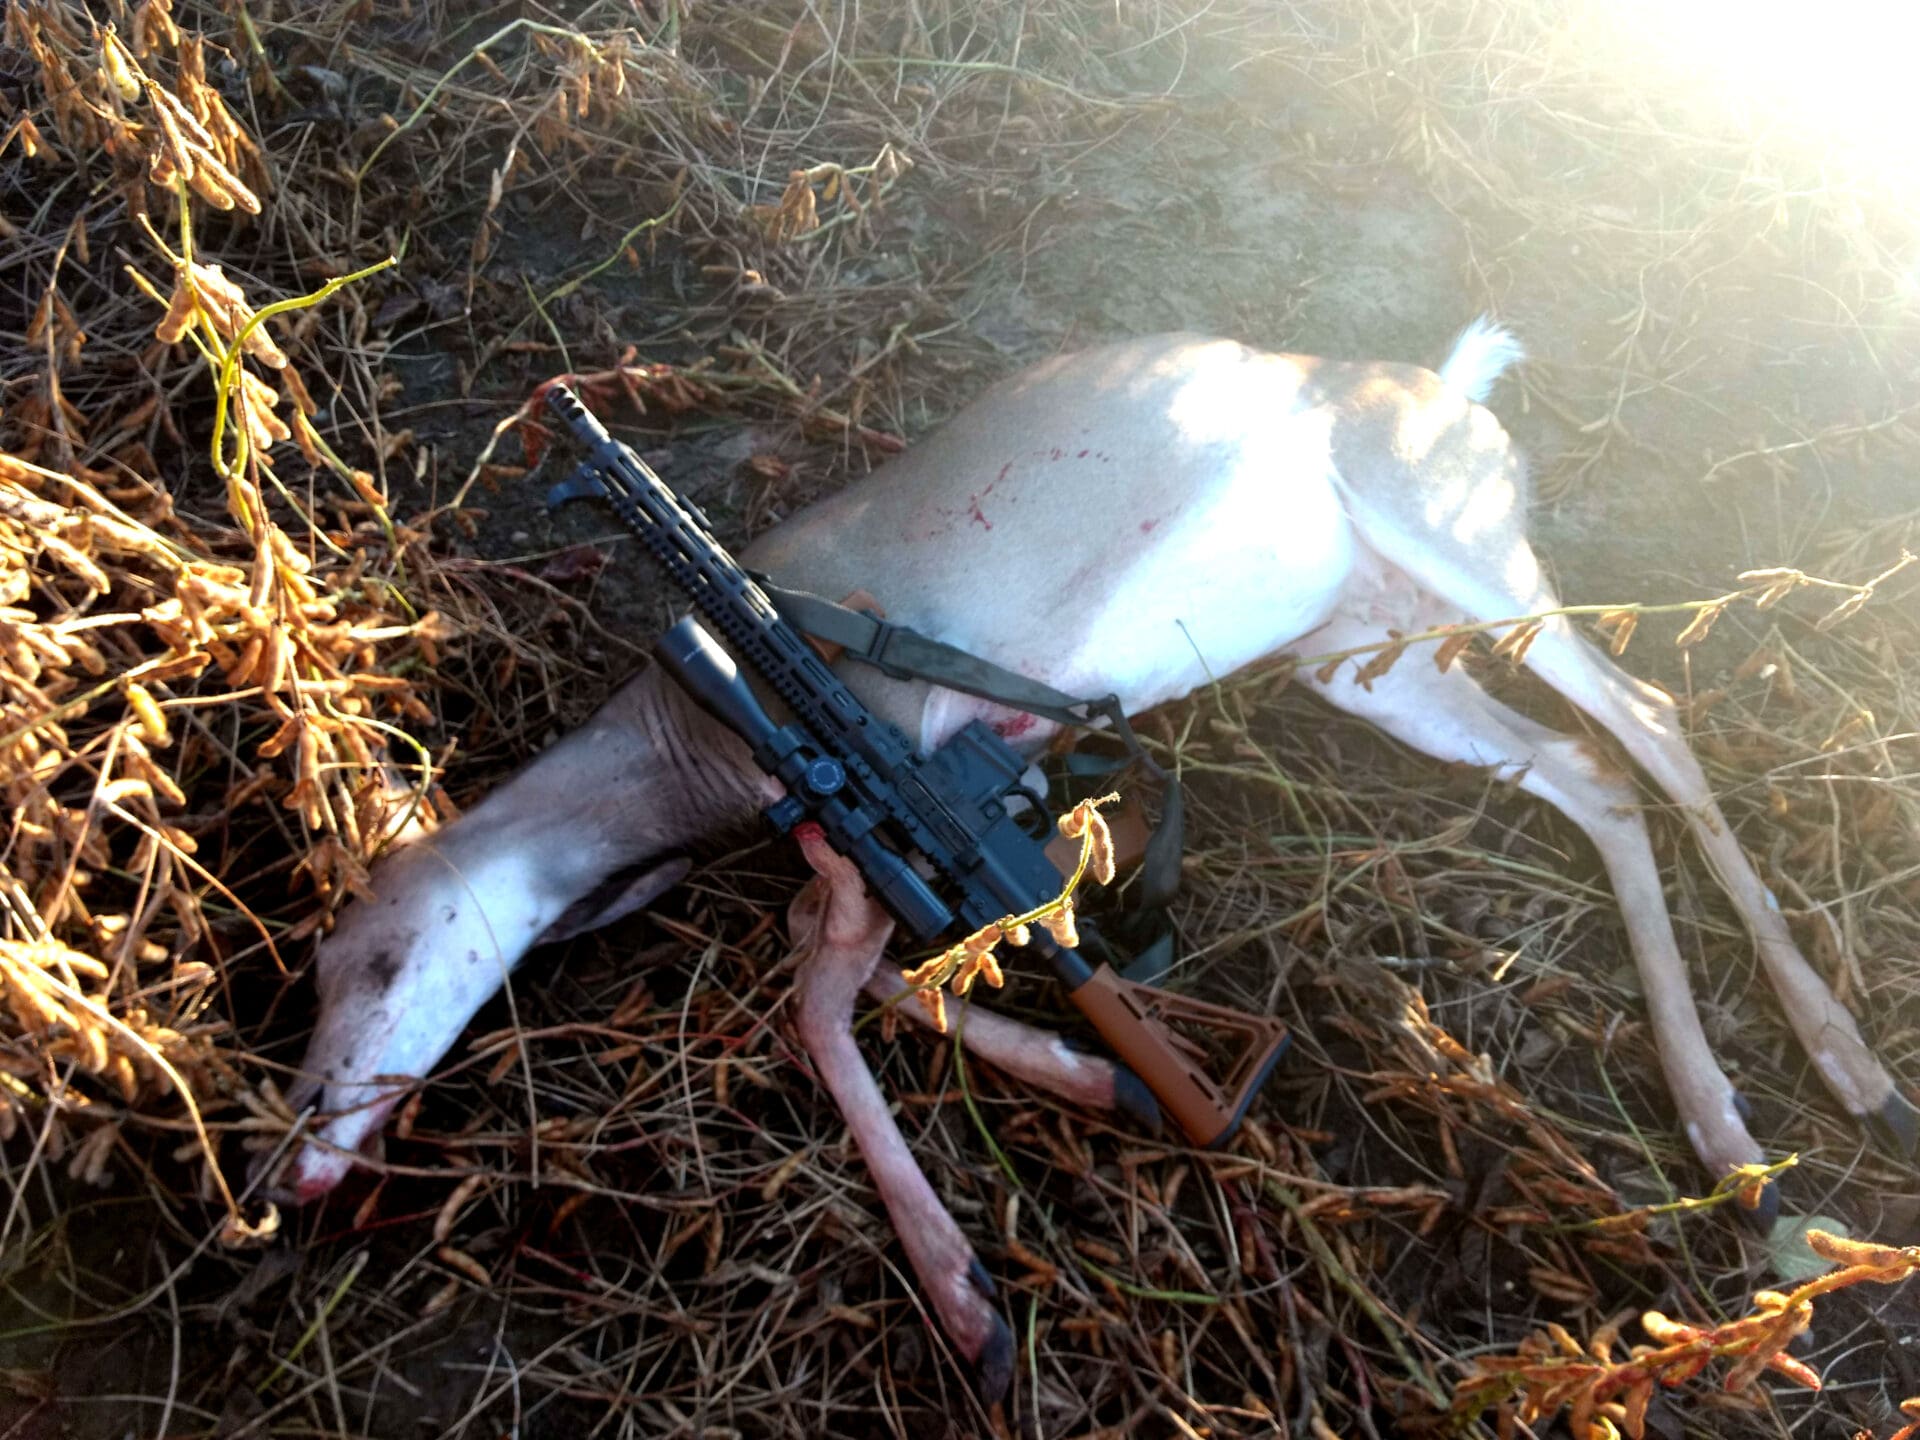 Long Range Hunting: Animal Cruelty or Skilled Sportsmanship?